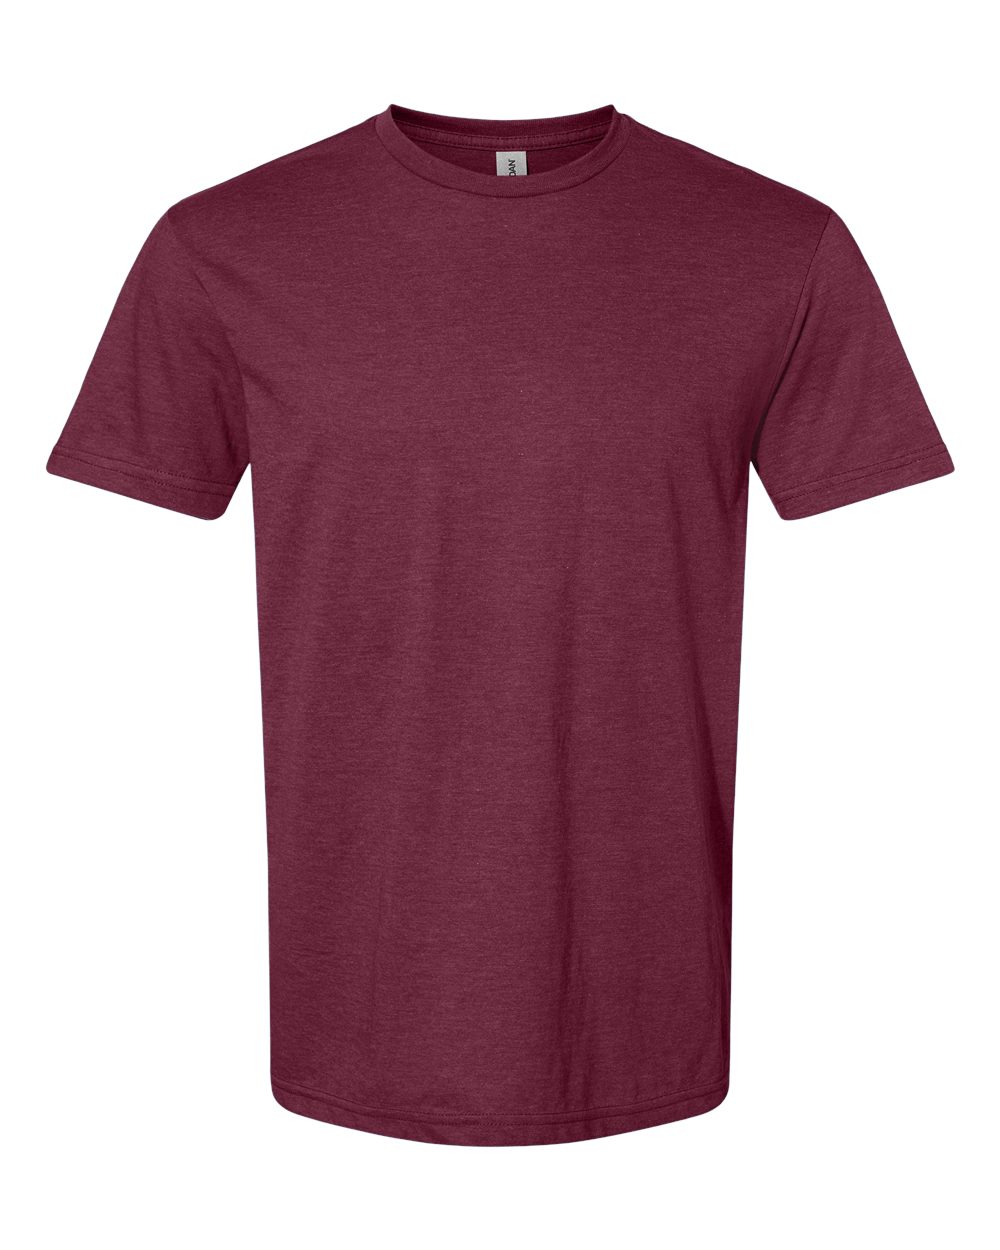 Gildan - Softstyle CVC T-Shirt - 67000